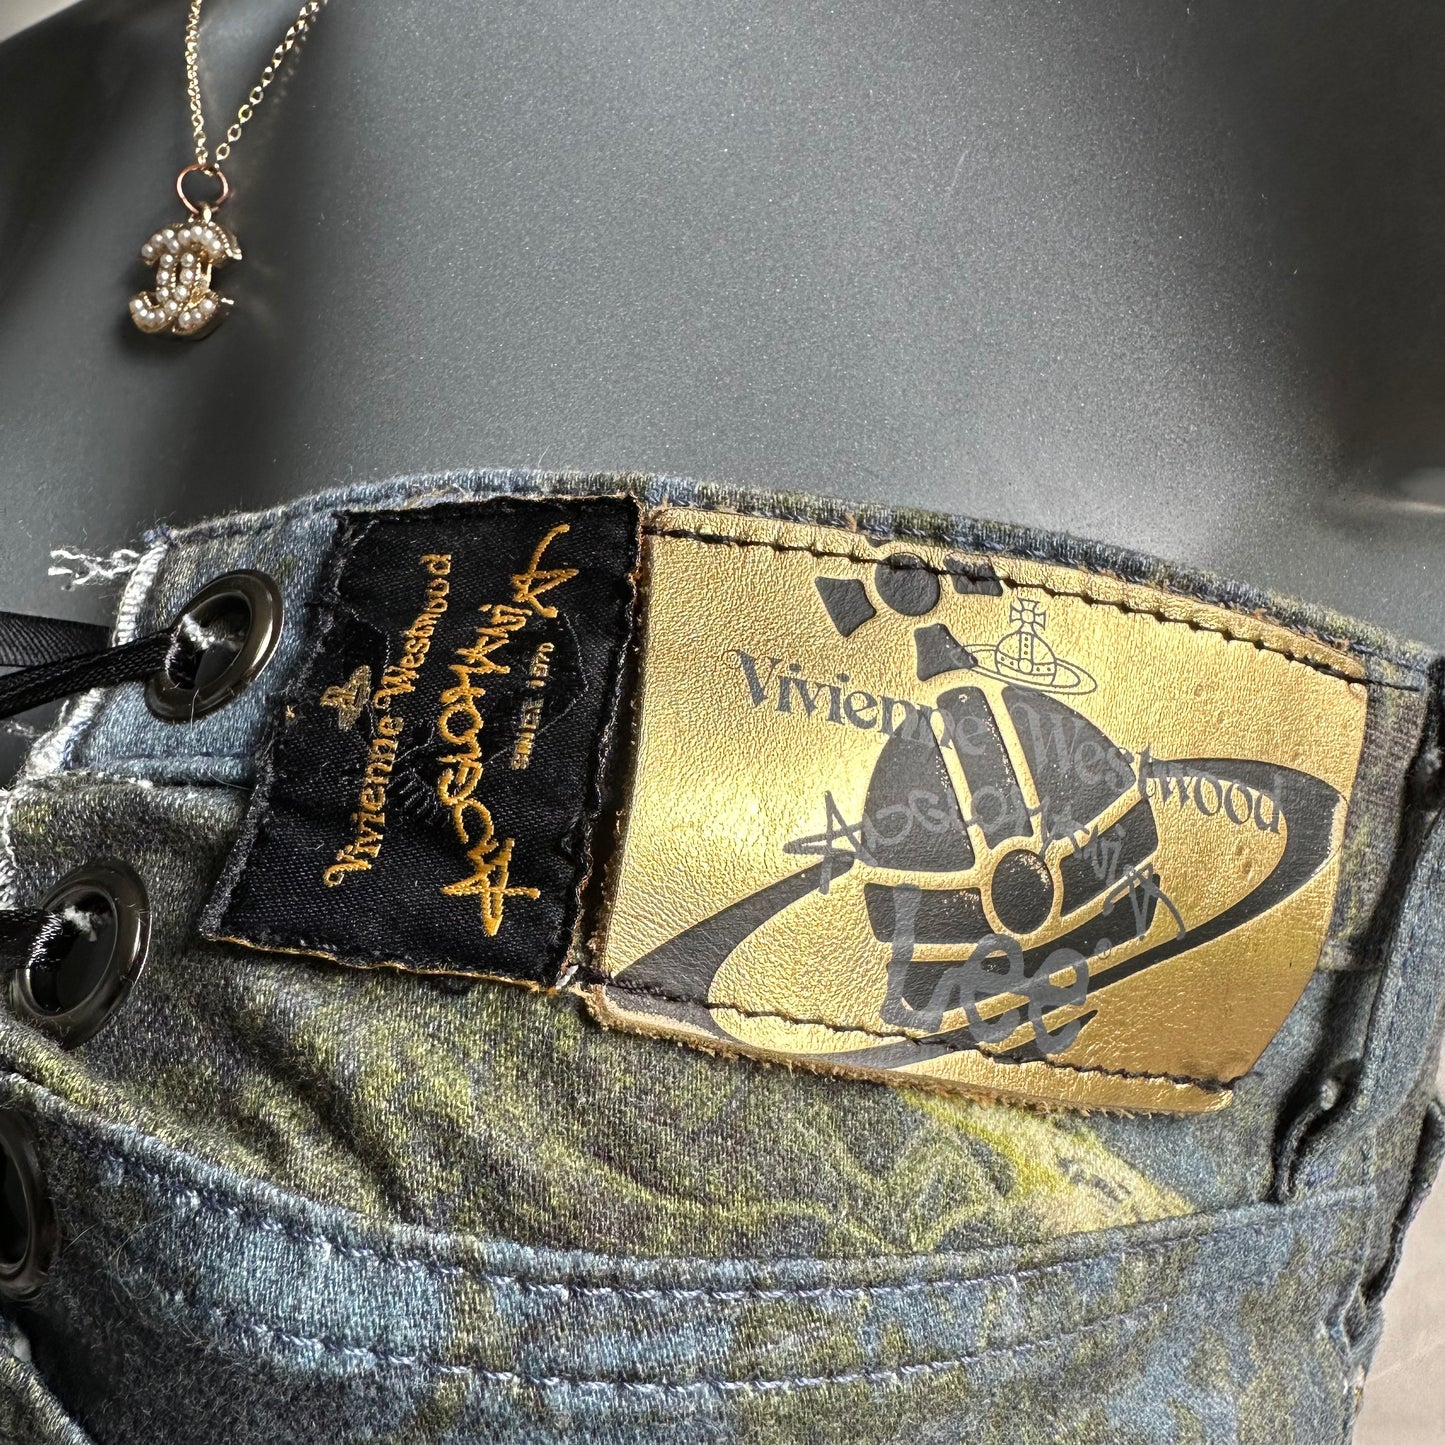 Authentic Vivienne Westwood Jeans Reworked into a Denim Corset Top 4 6 8